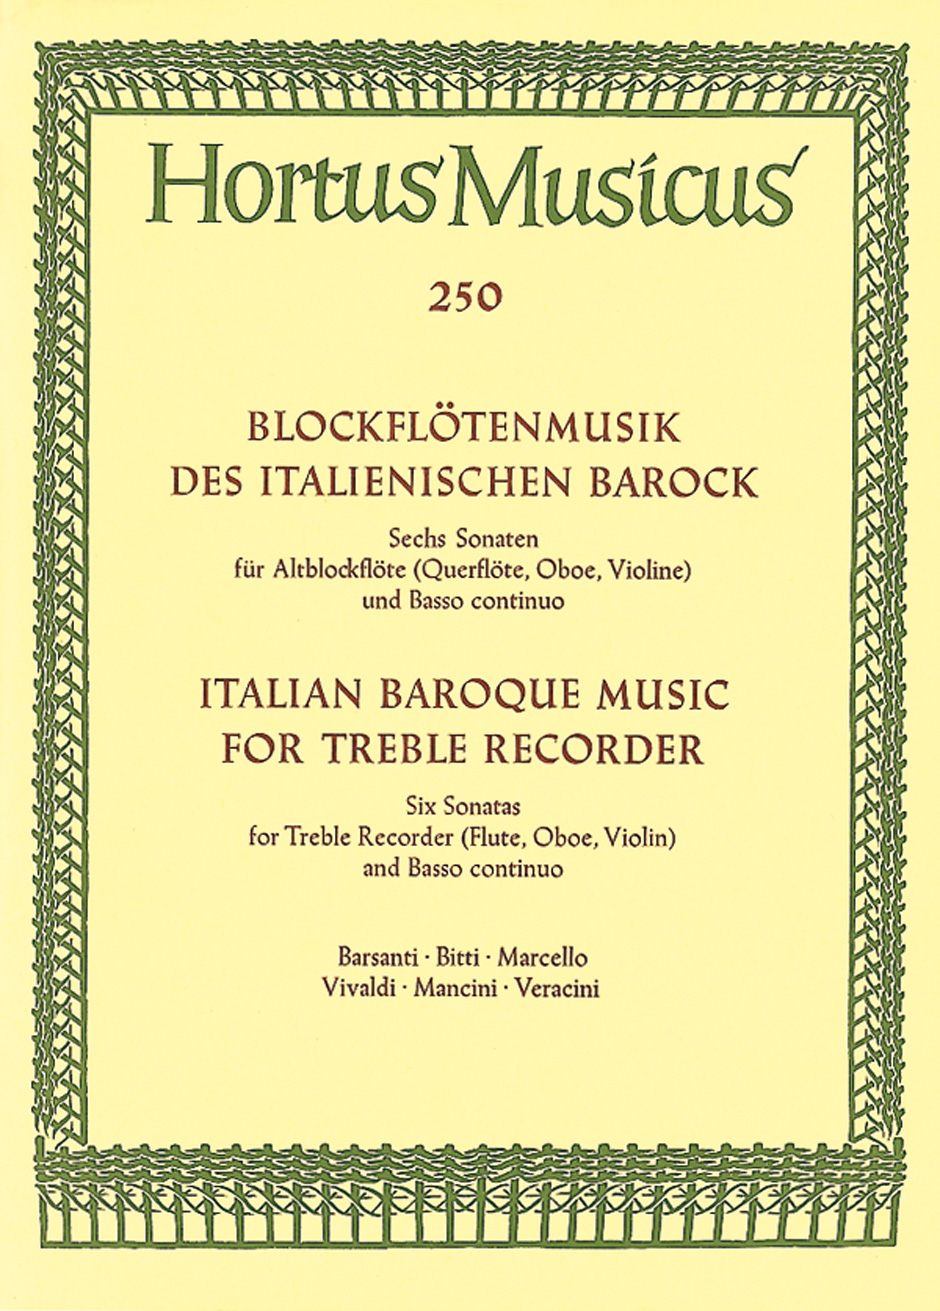 Blockfltensonaten des italienischen Barock: Recorder: Instrumental Album